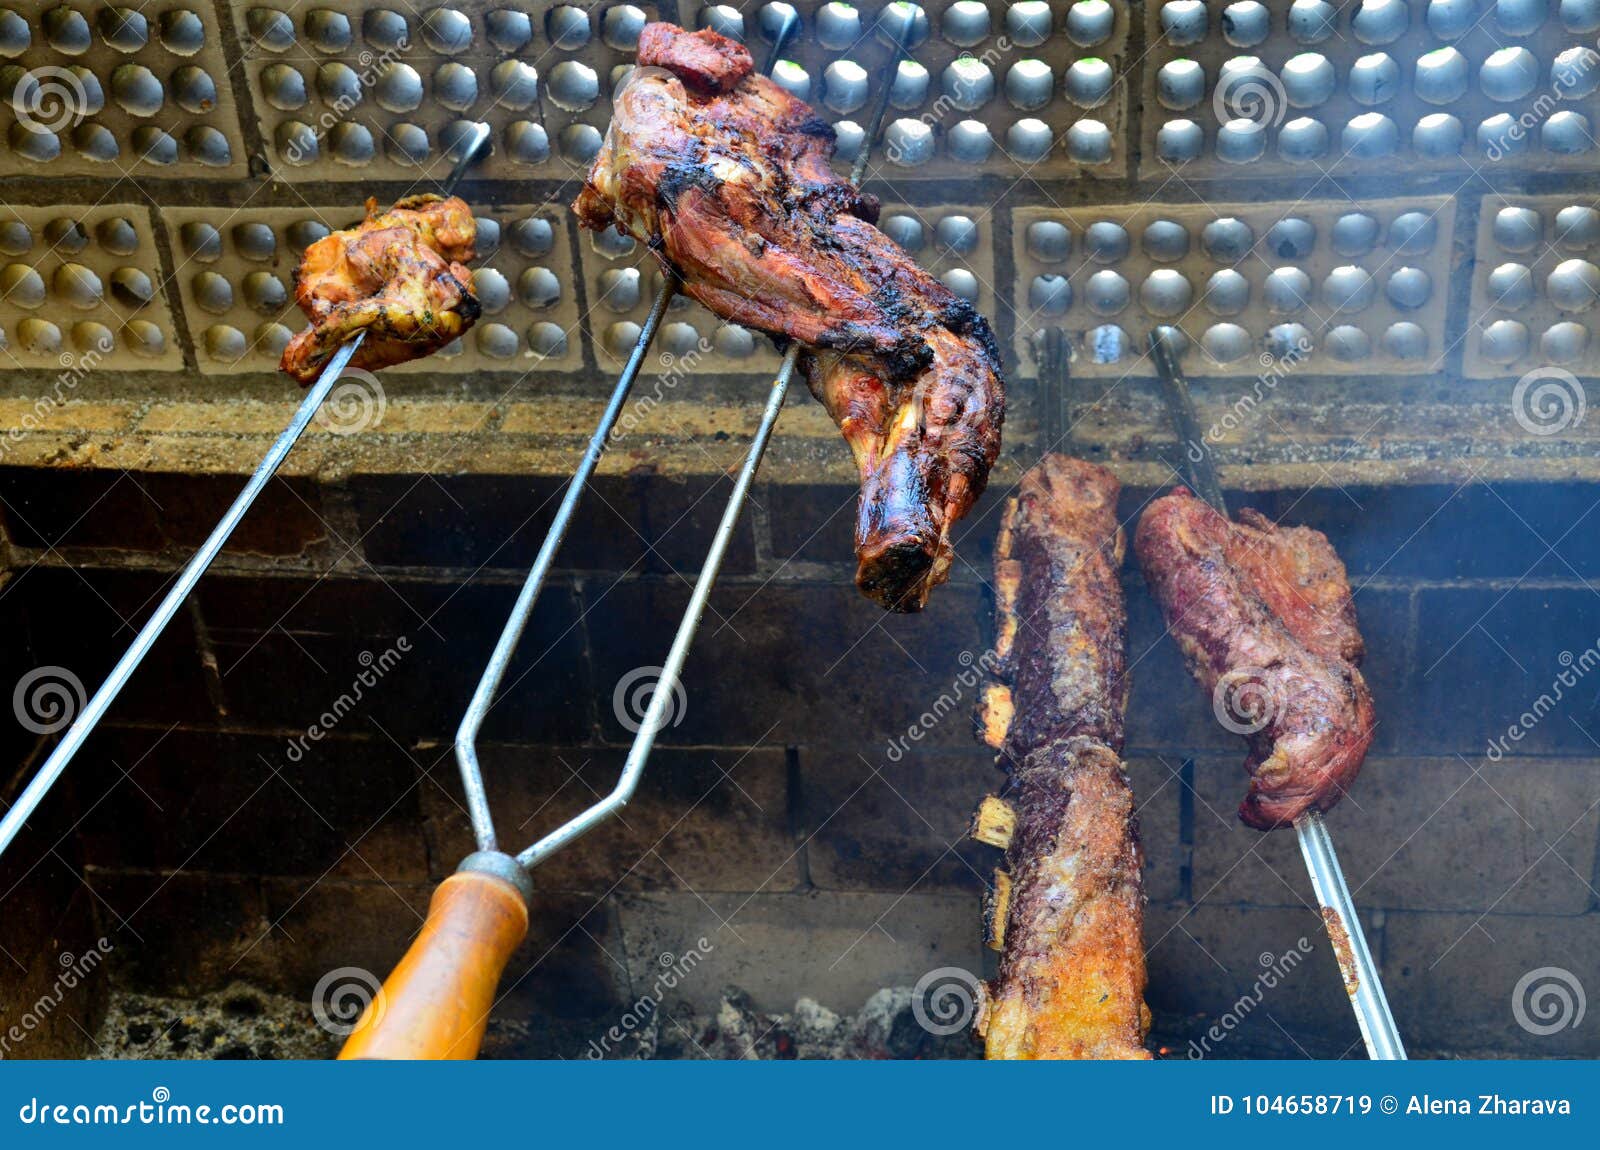 https://thumbs.dreamstime.com/z/brazilian-churrasco-traditional-brazilian-barbecue-brazilian-churrasco-traditional-brazilian-barbecue-rio-grande-do-sul-104658719.jpg